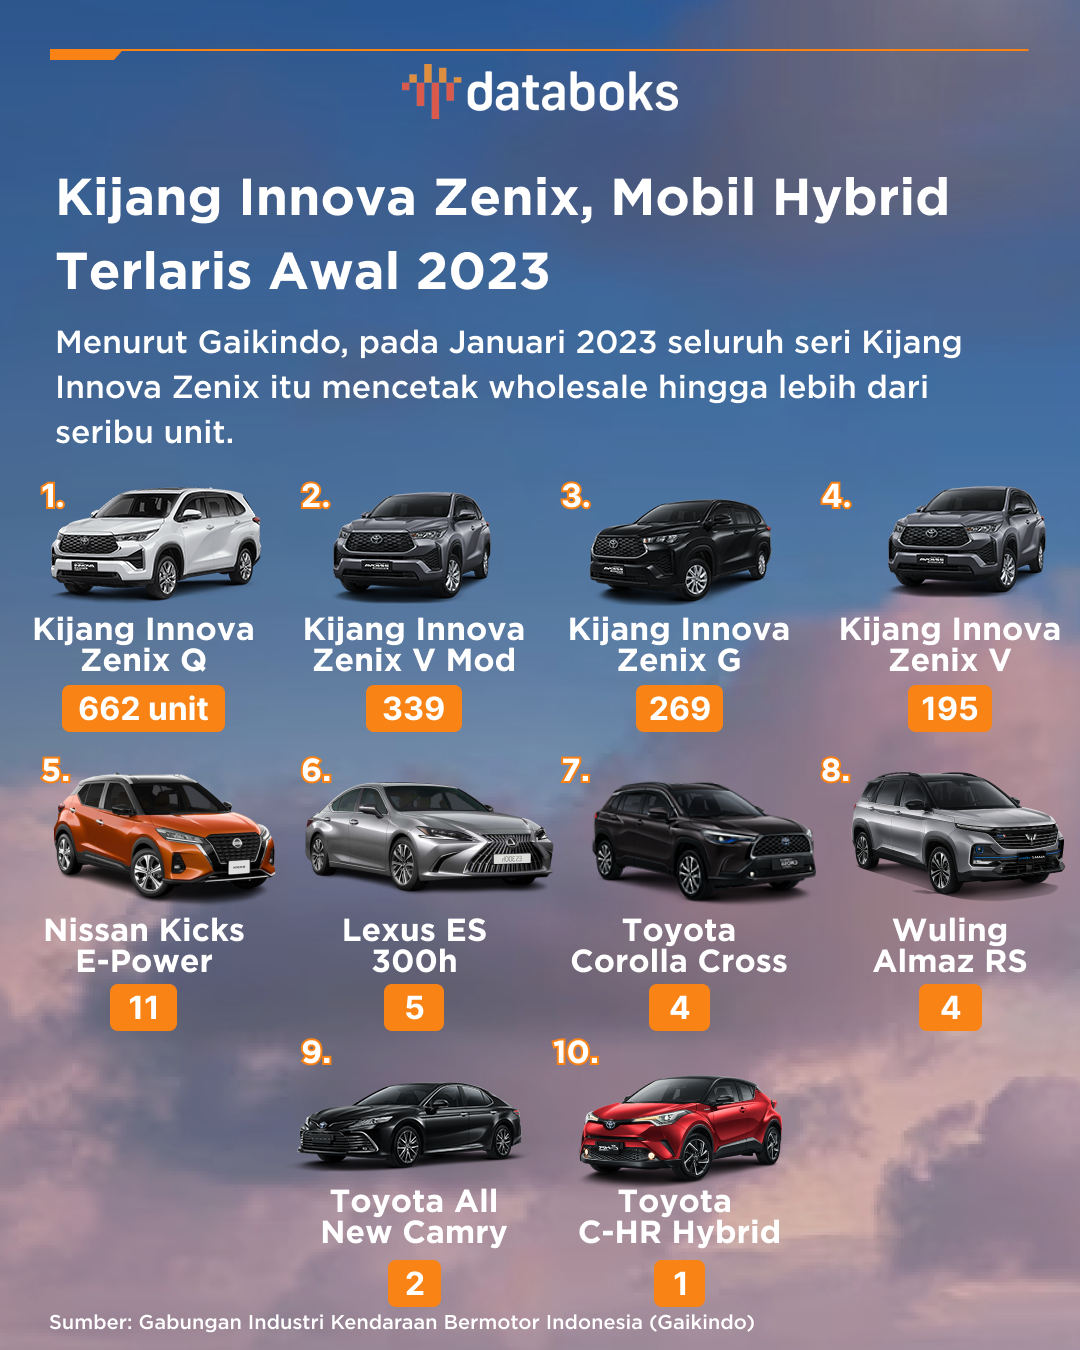 Kijang Innova Zenix Mobil Hybrid Terlaris Awal